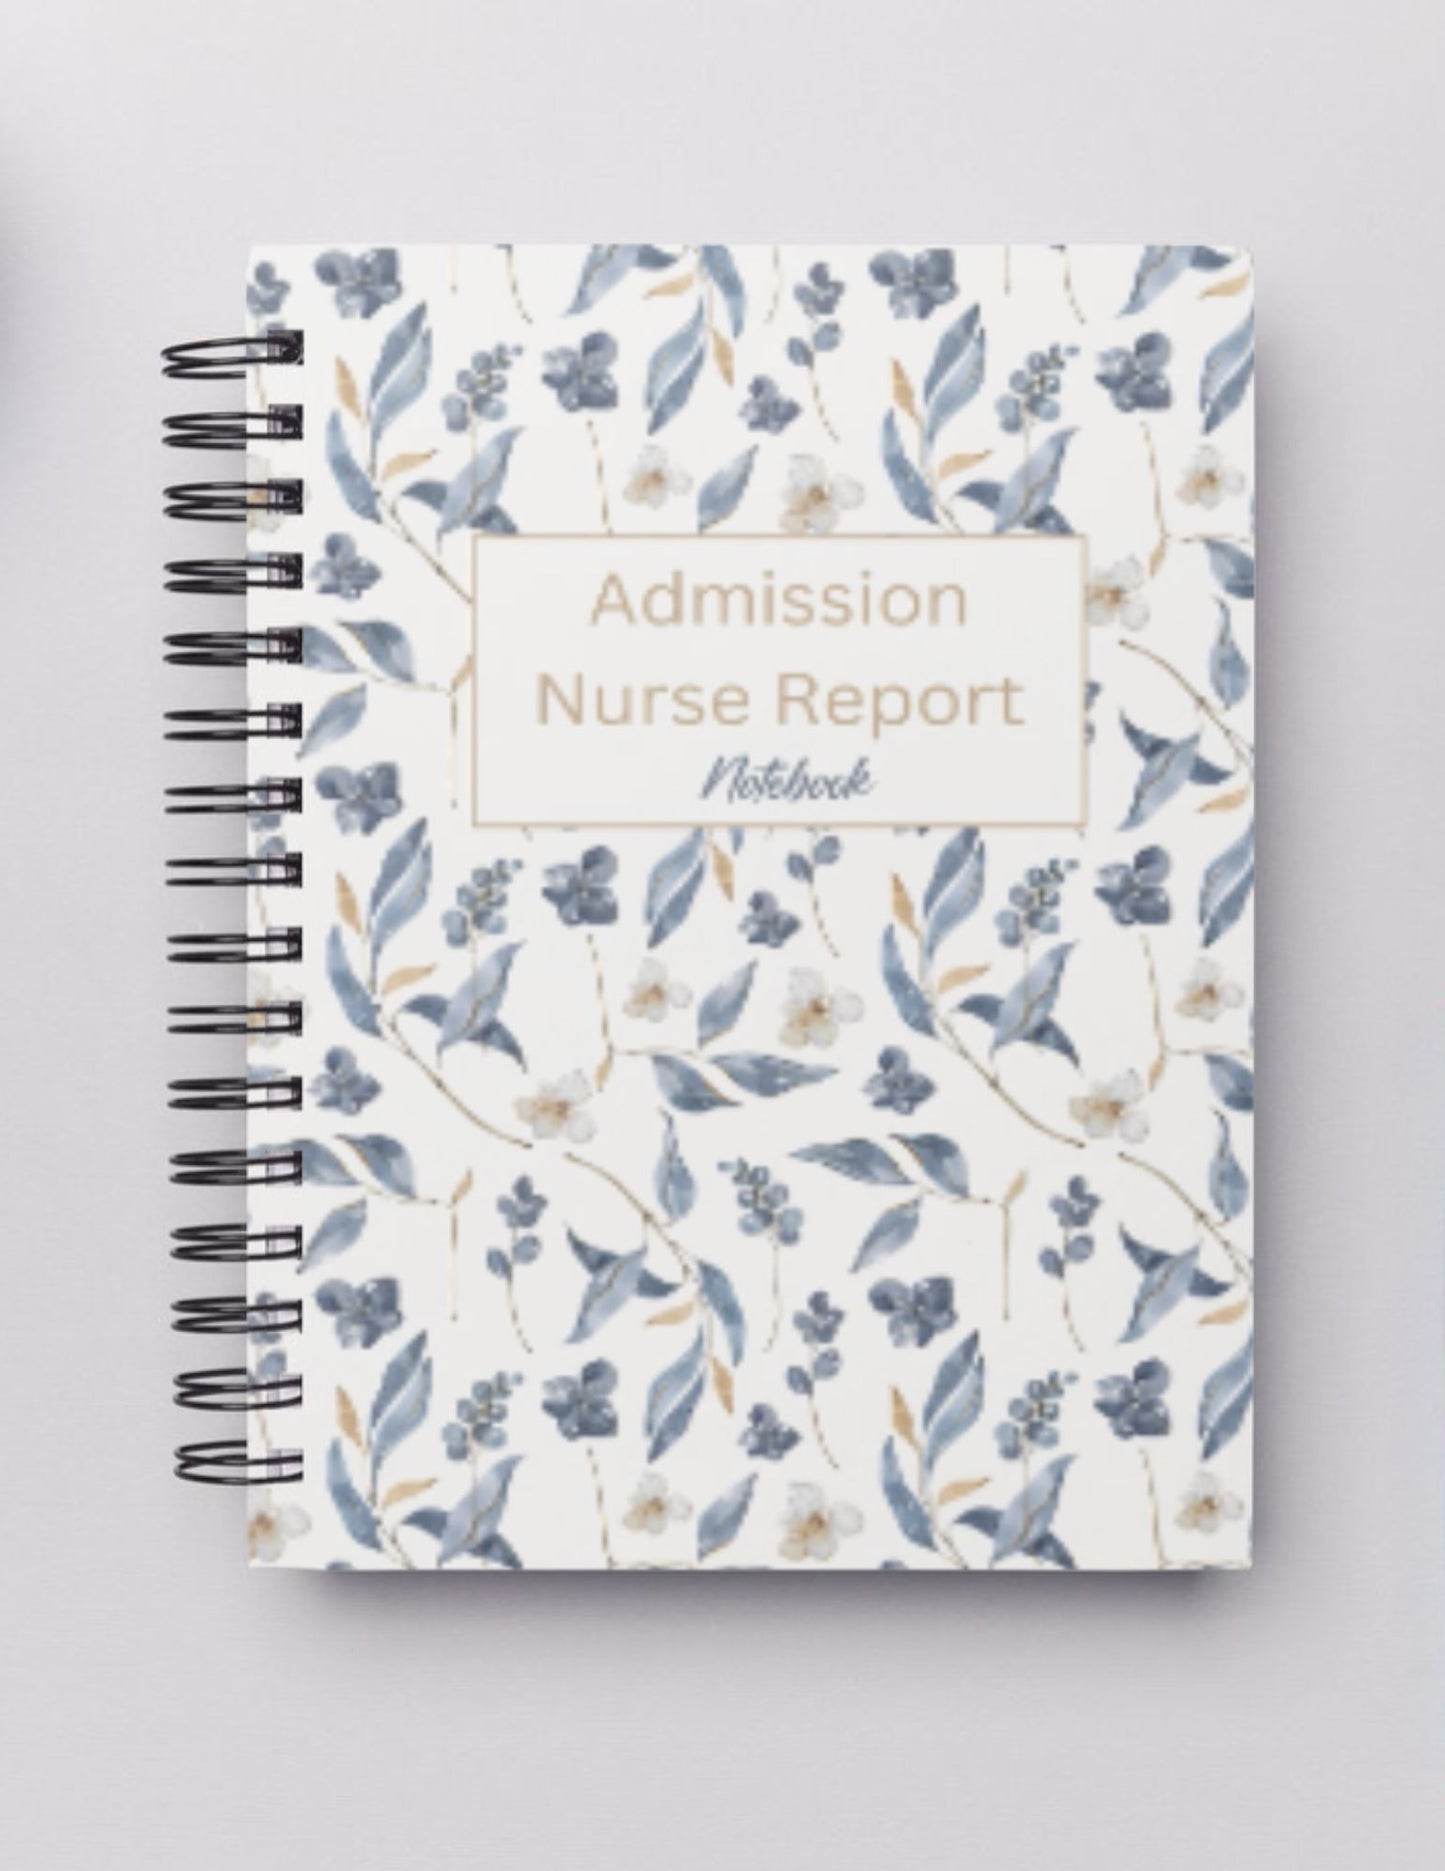 Admission Nurse Report Notebook